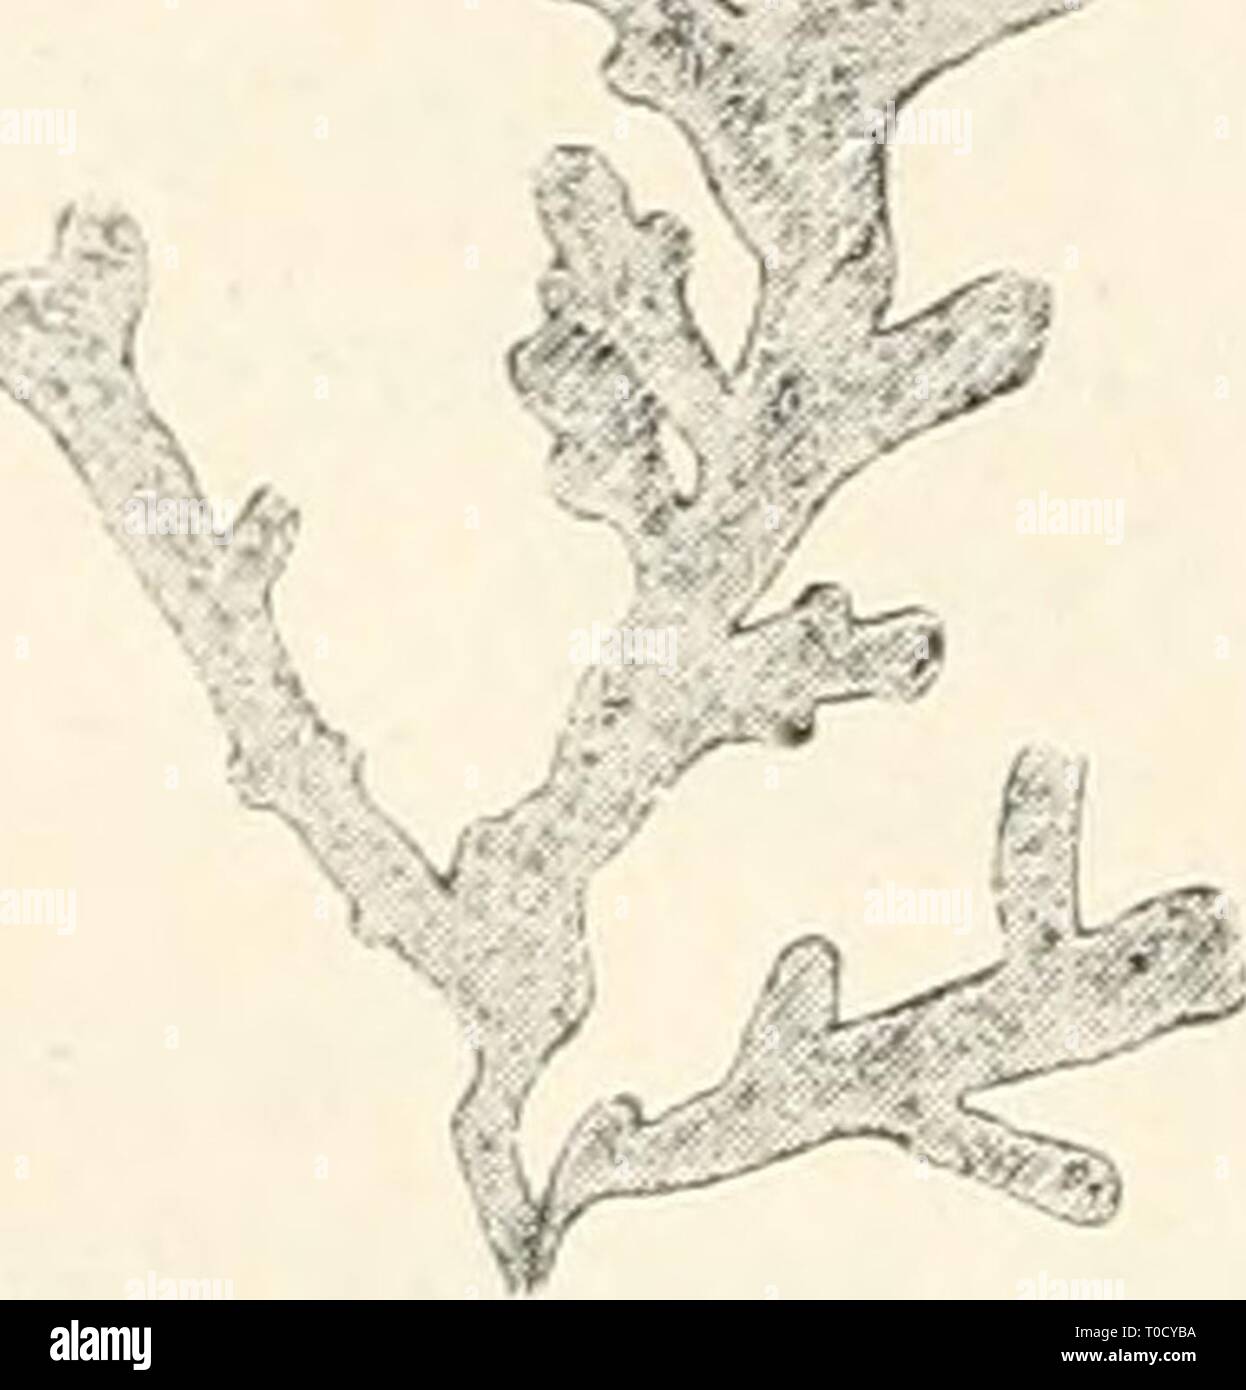 Dr L Rabenhorst's Kryptogamen-Flora von Dr. L. Rabenhorst's Kryptogamen-Flora von Deutschland, Oesterreich und der Schweiz drlrabenhorstskr0601rabe Year: 1906  338 Ä7reura. 54. Aneiira Sinuata (Dickson) Dnmortier, Comm. bot. S. 115 (1822). Synonyme: Jungerraannia sinuata Dickson, PI. Crypt. Brit. fasc. 2. S. 16 (1790). Jungermannia multifida/i sinuata Hook er, British Jungerm. tab. 45 Fig. 2 (1816). Gymnomitrium sinuatum Hüben er, Hep. germ. S. 39 (1834), Riccardia latifrons ß sinuata Lindberg, Hep. in Hib. lectae S. 513 (1874). Riccardia sinuata Trevisan, Schema nuov. class. Epat. S. 431 (187 Stock Photo